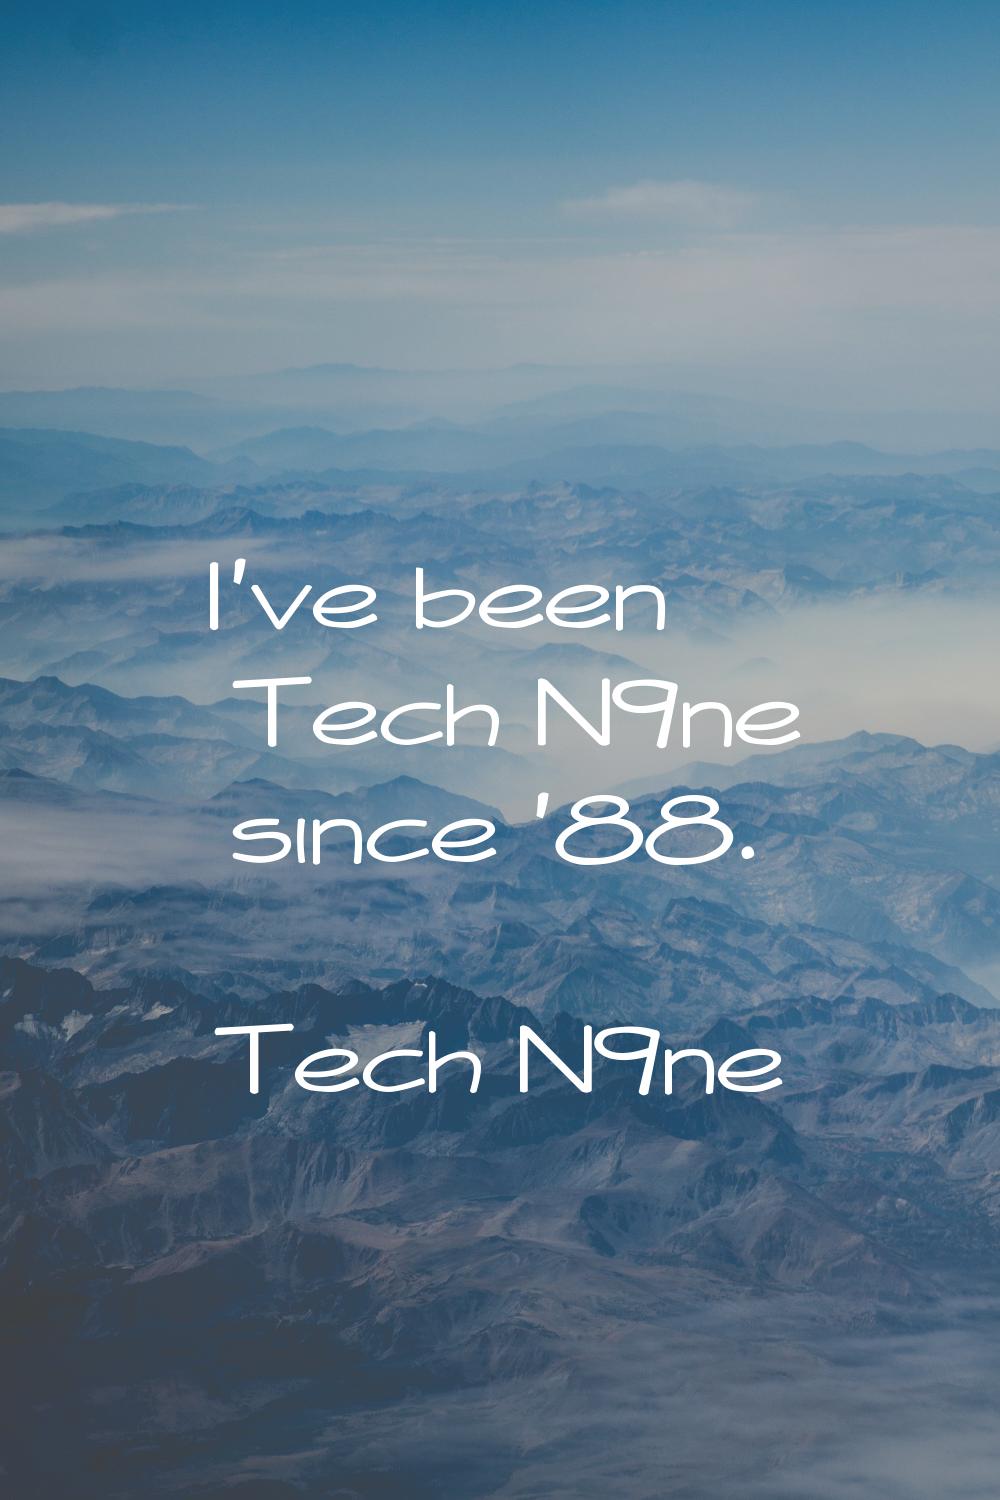 I've been Tech N9ne since '88.